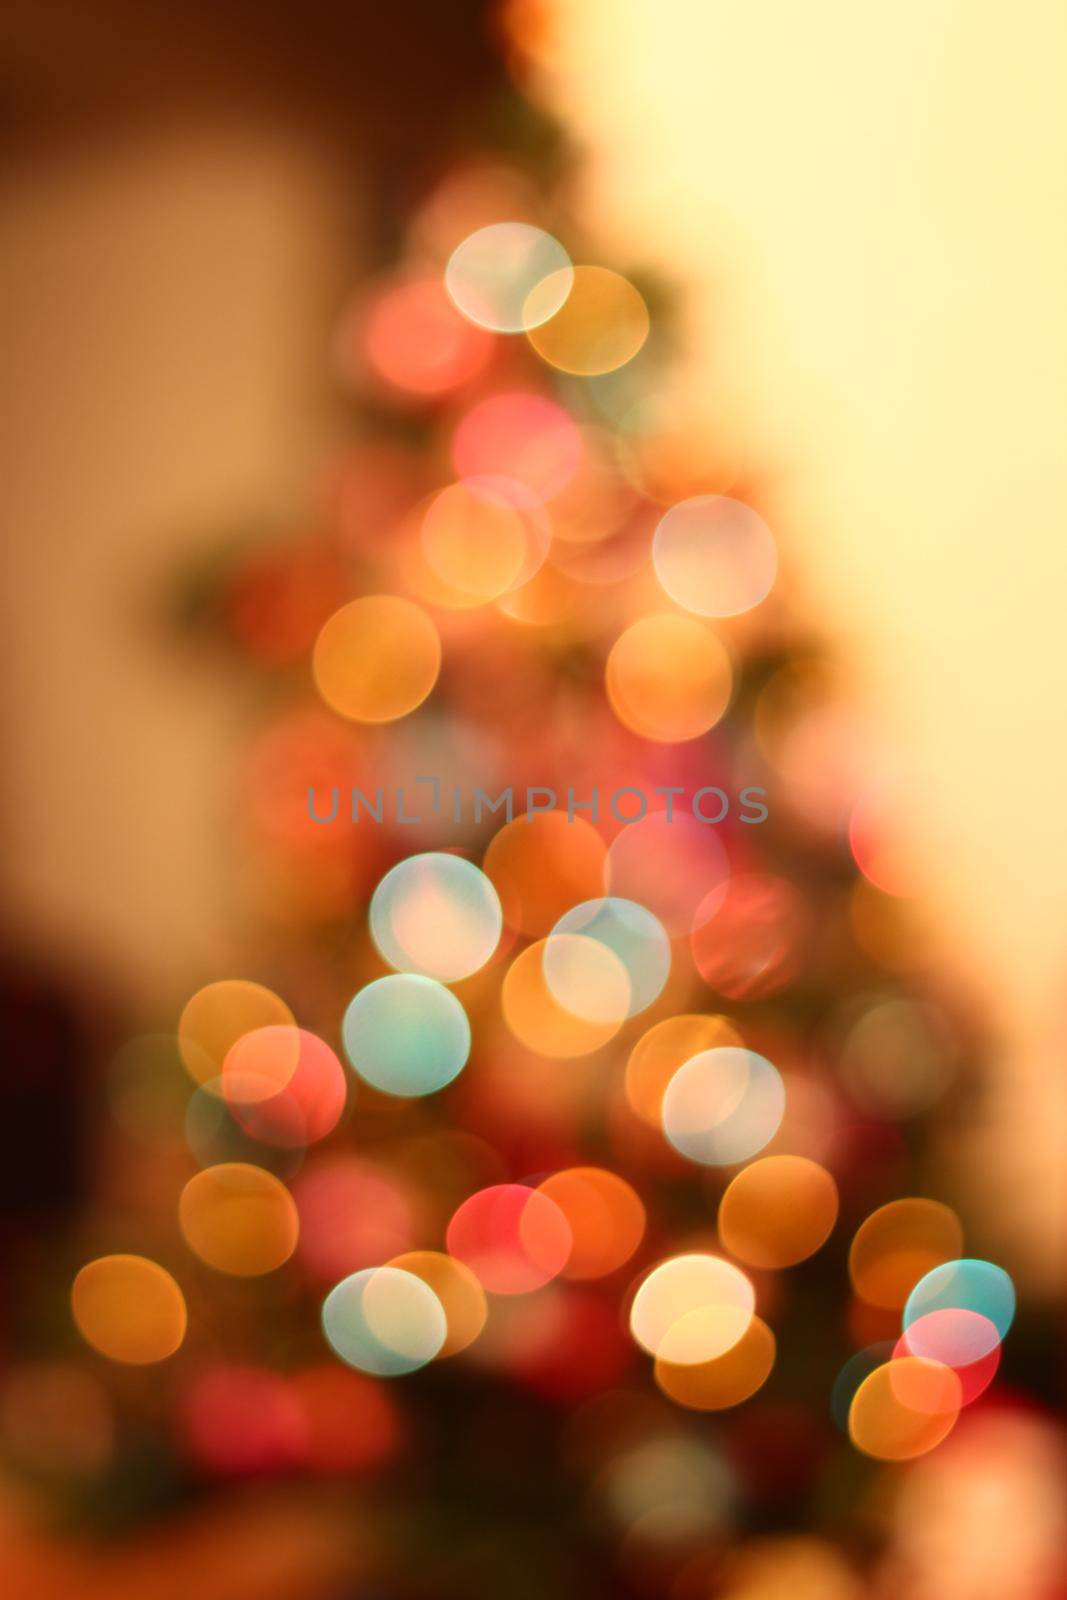 Christmas lights on xmas tree defocused. Holiday bokeh background by dreamloud